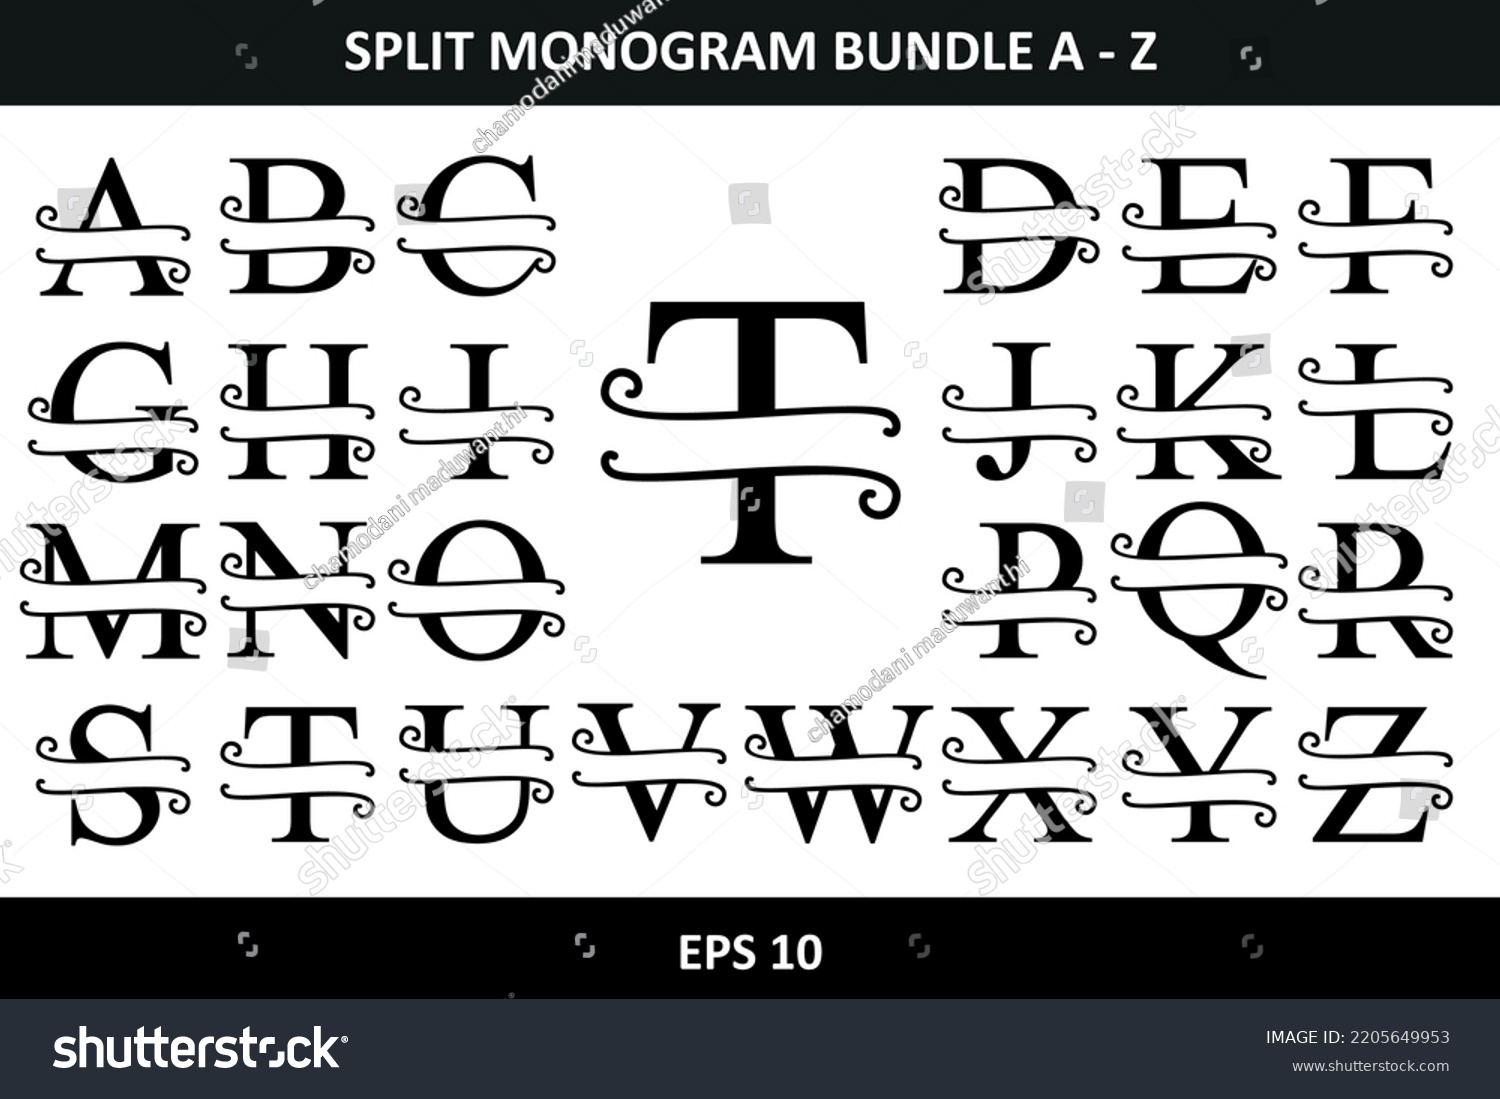 SVG of Alphabet Split Monogram, Split Letter Monogram, Alphabet Frame Font. Laser cut template. Initial letters of the monogram. svg